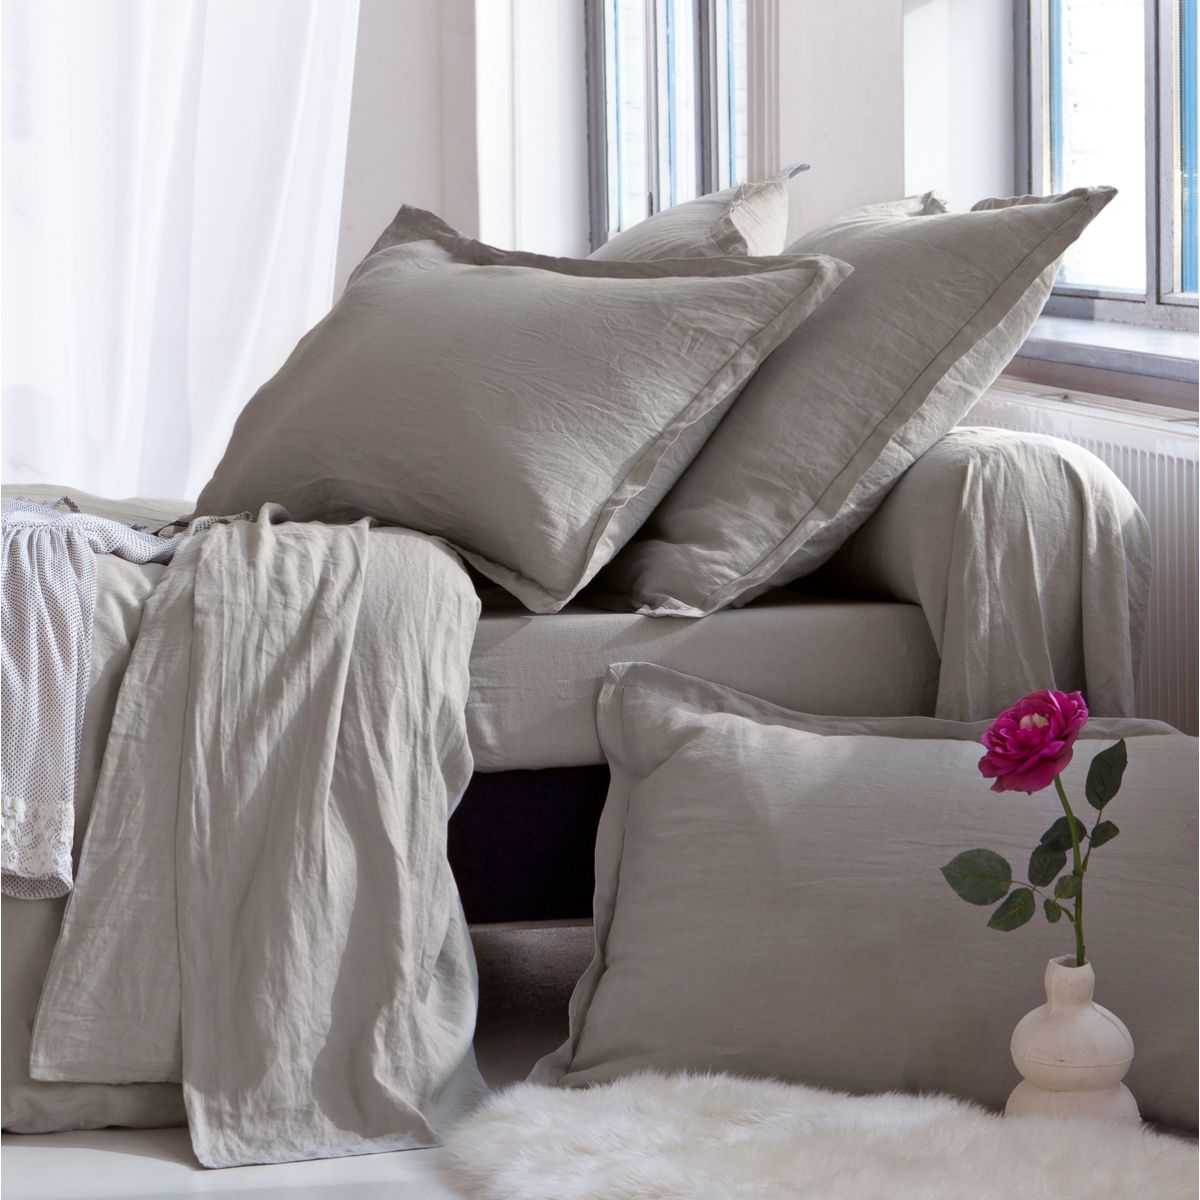 Washed cotton bed linen set